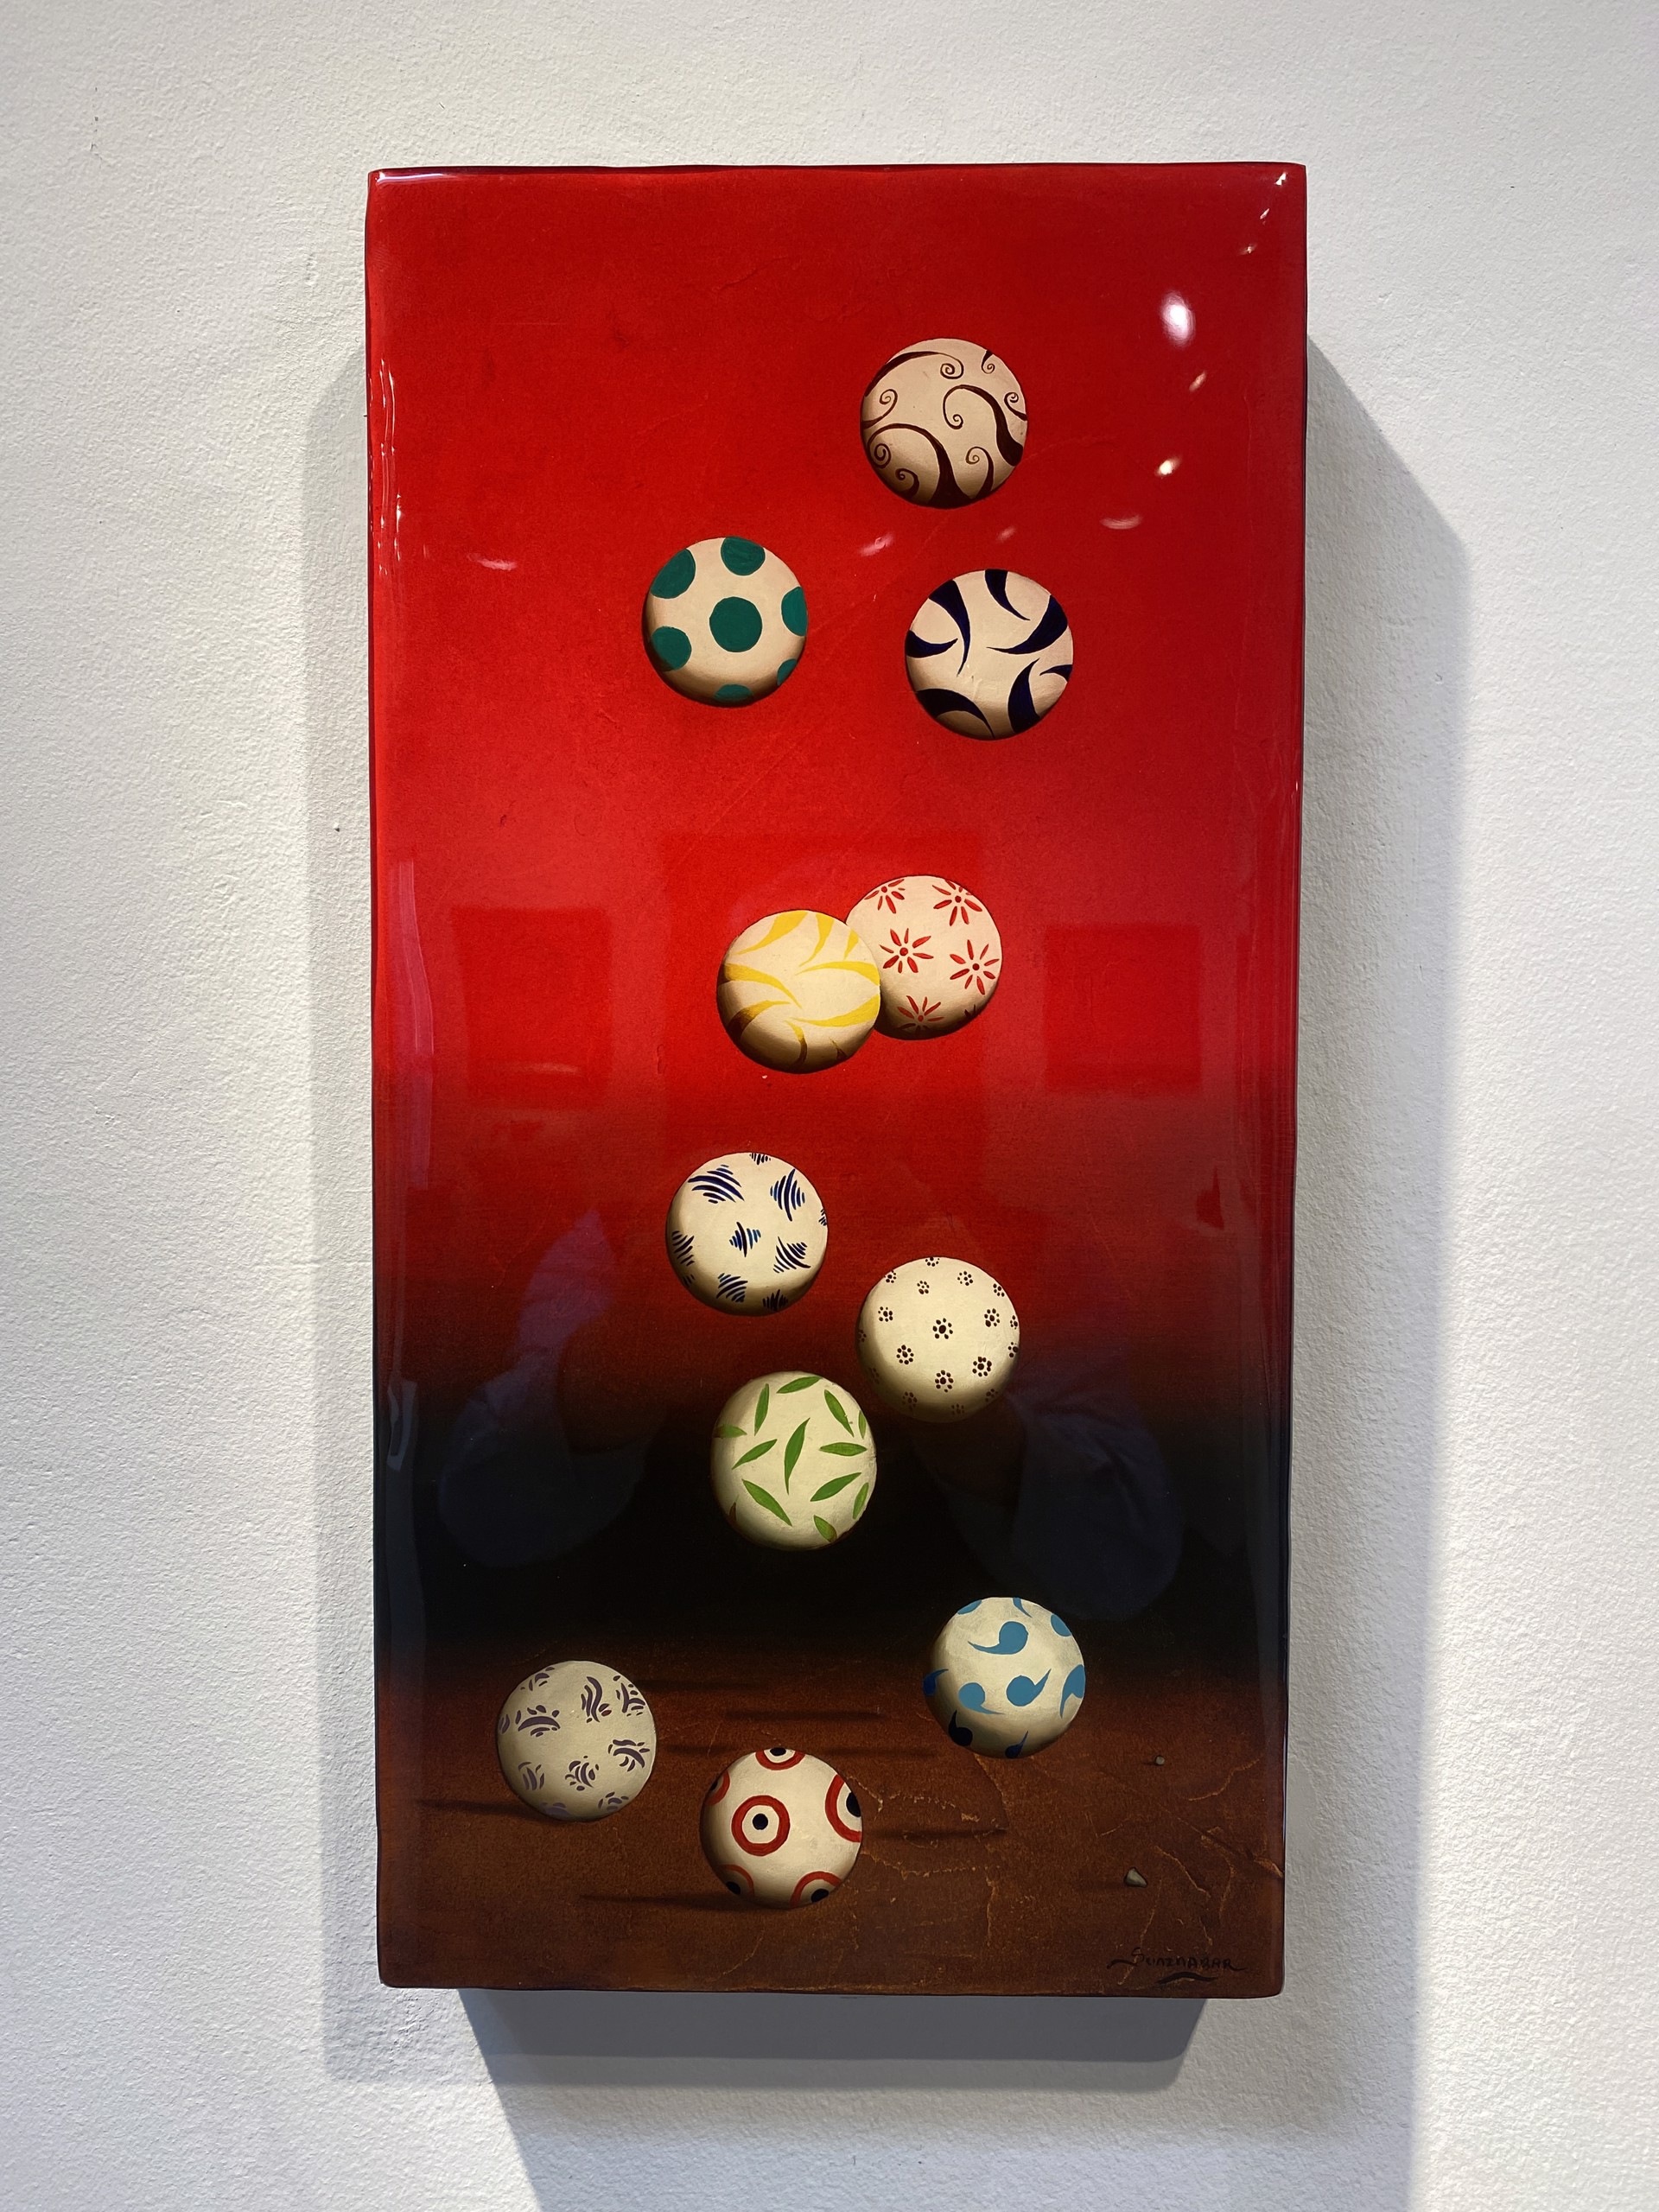 Esferas by Marcelo Suaznabar